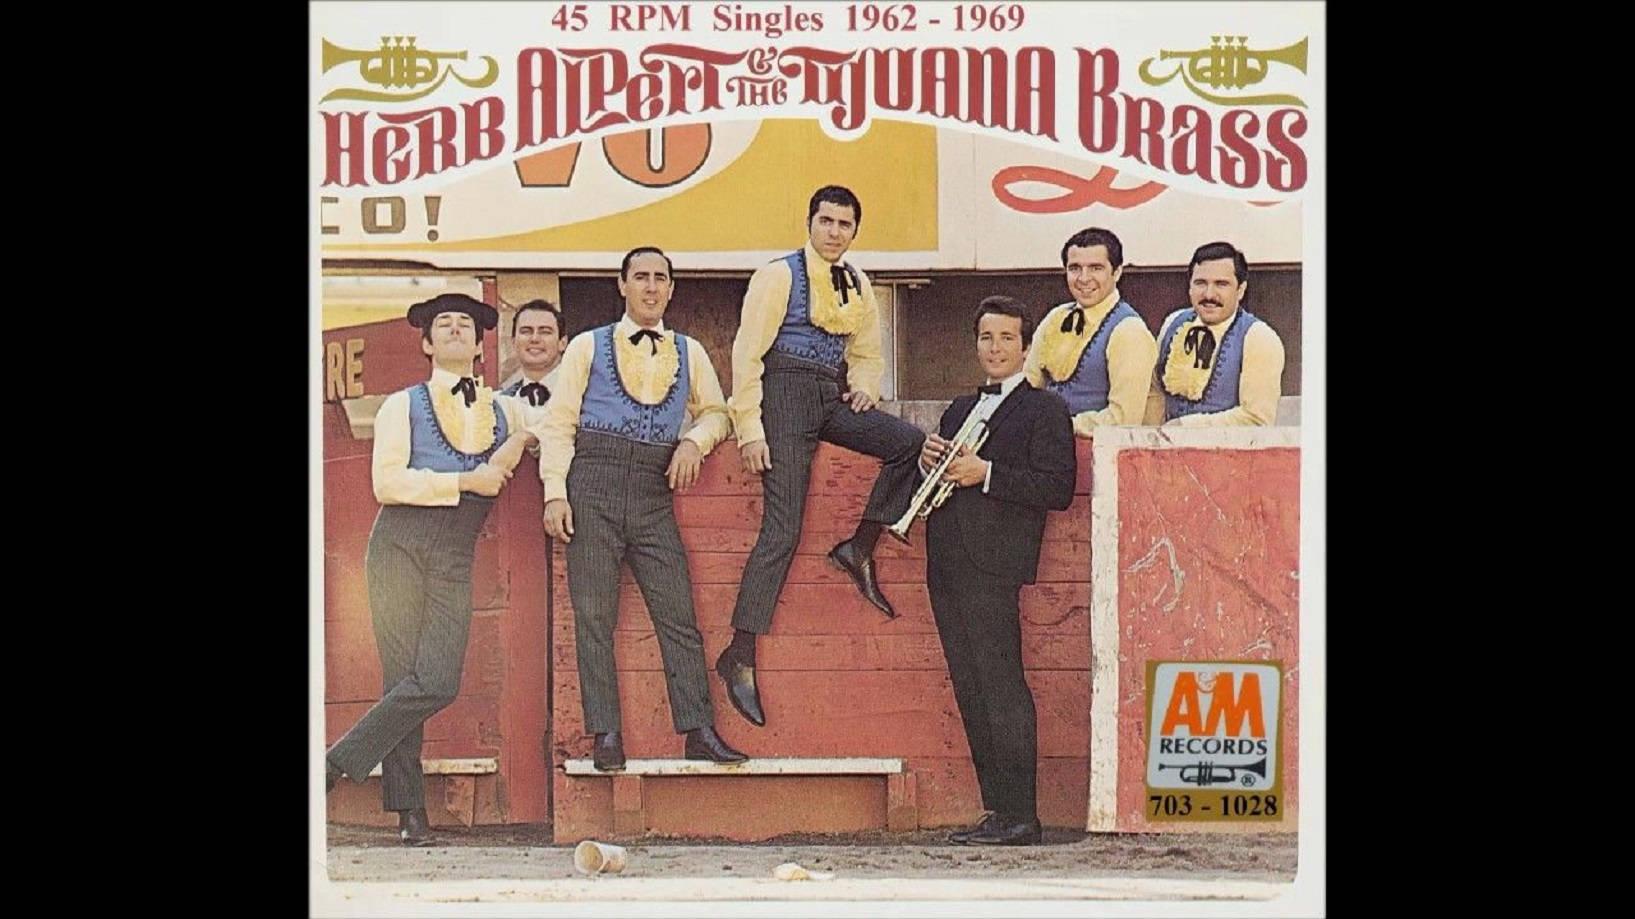 Download Herb Alpert And The Tijuana Brass Band Members Wallpaper